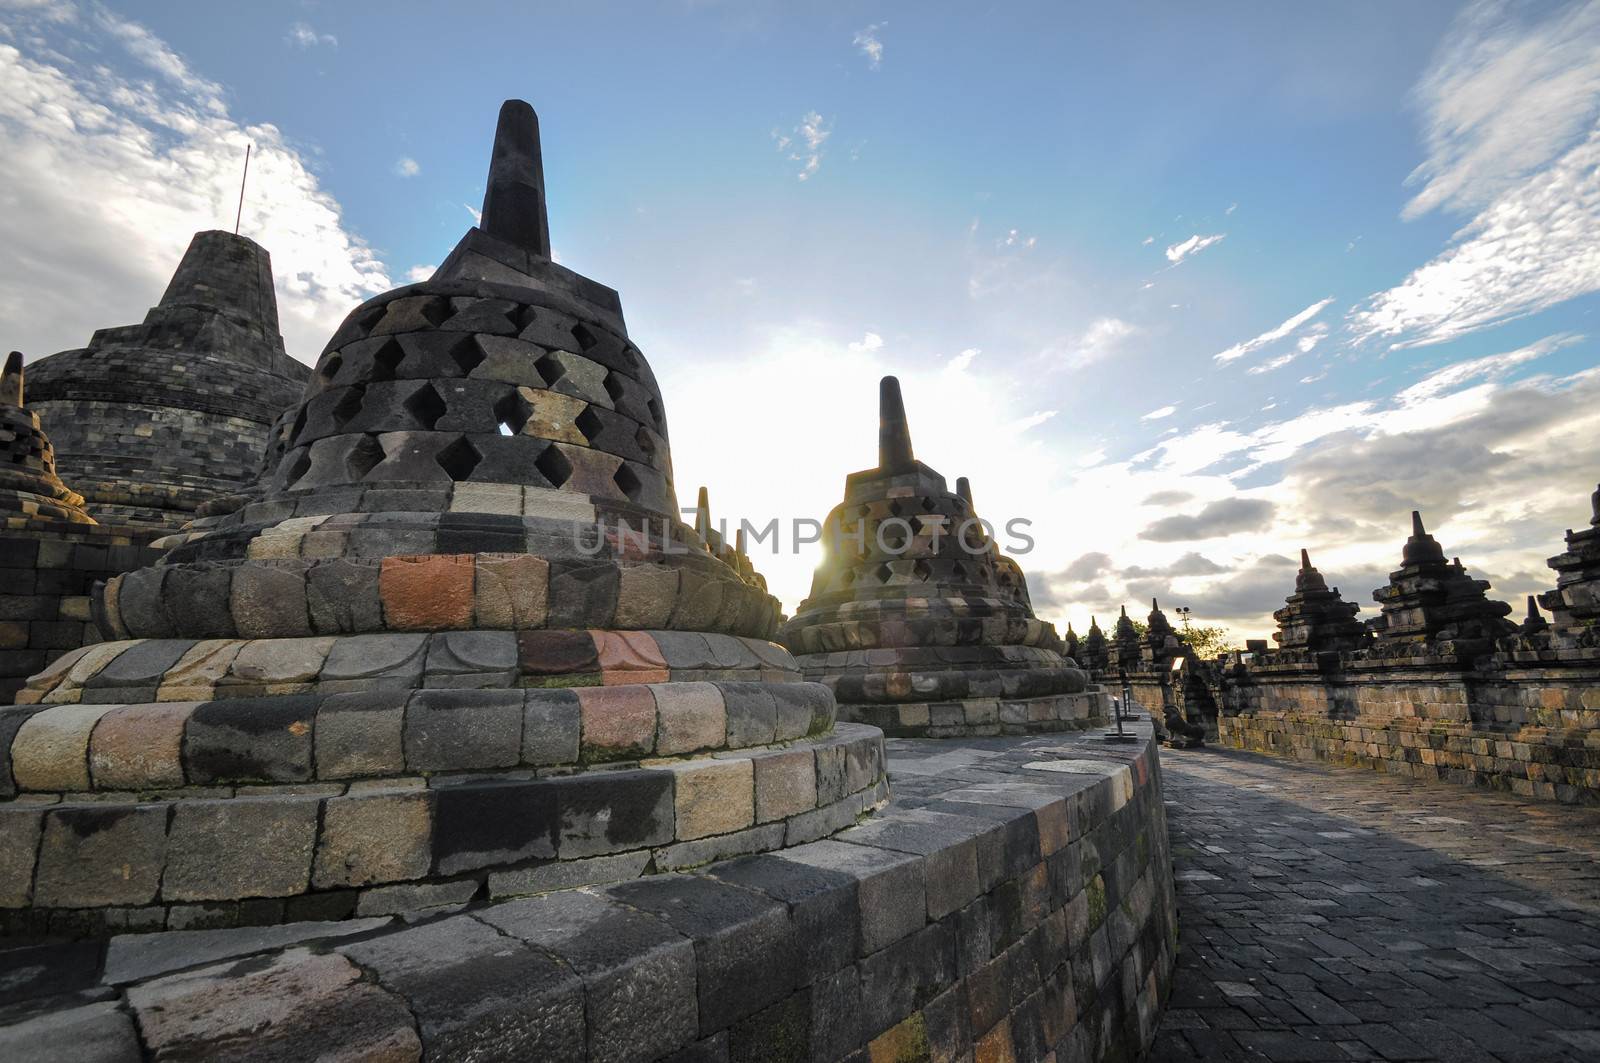 Buddist temple Borobudur heritage complex in Yogjakarta in Java by weltreisendertj